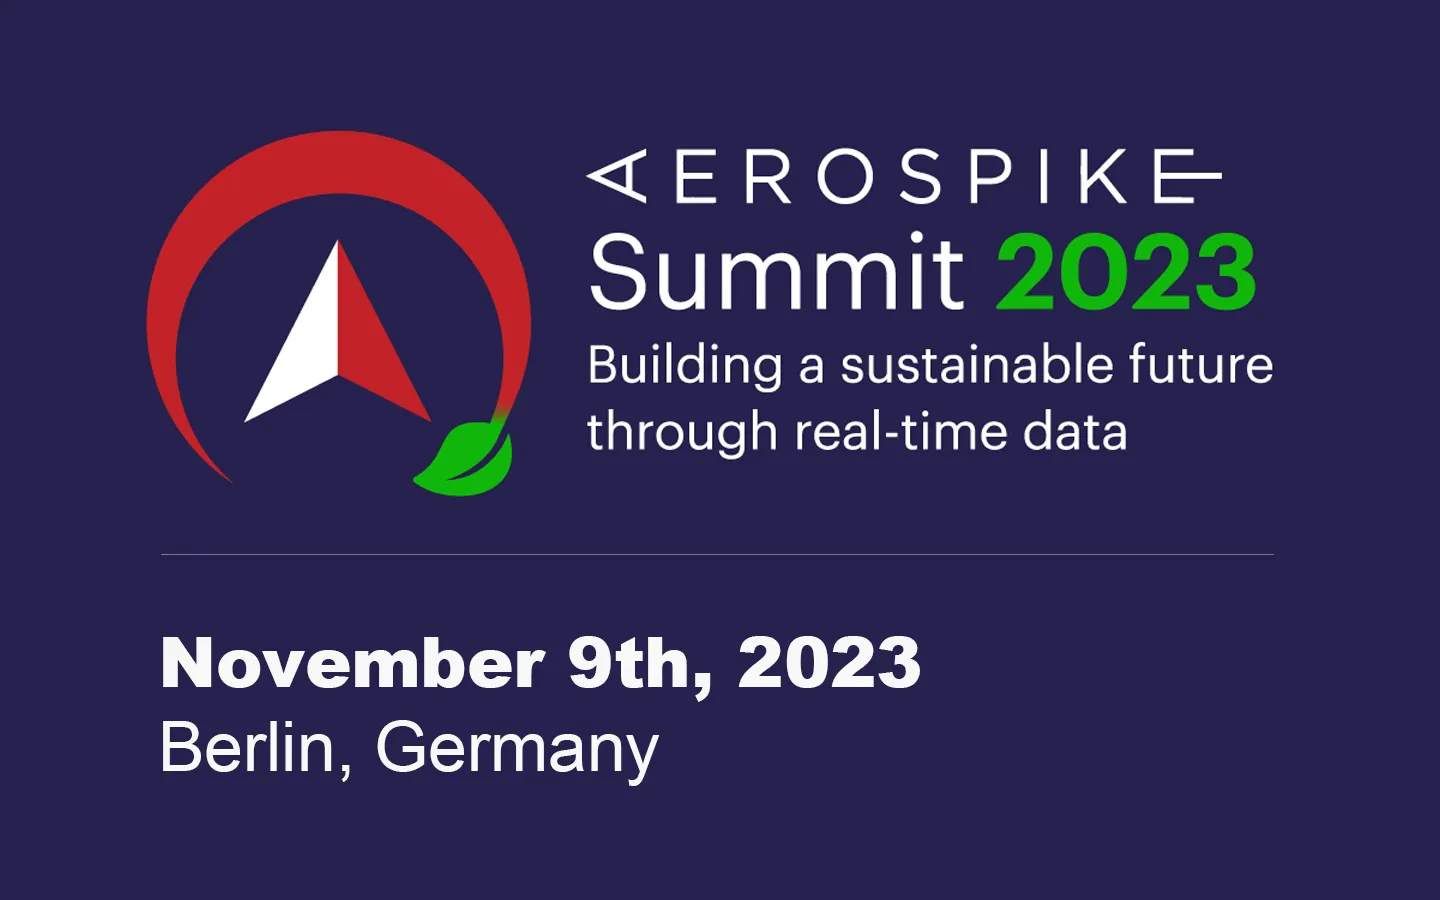 Aerospike Summit 2023 Berlin